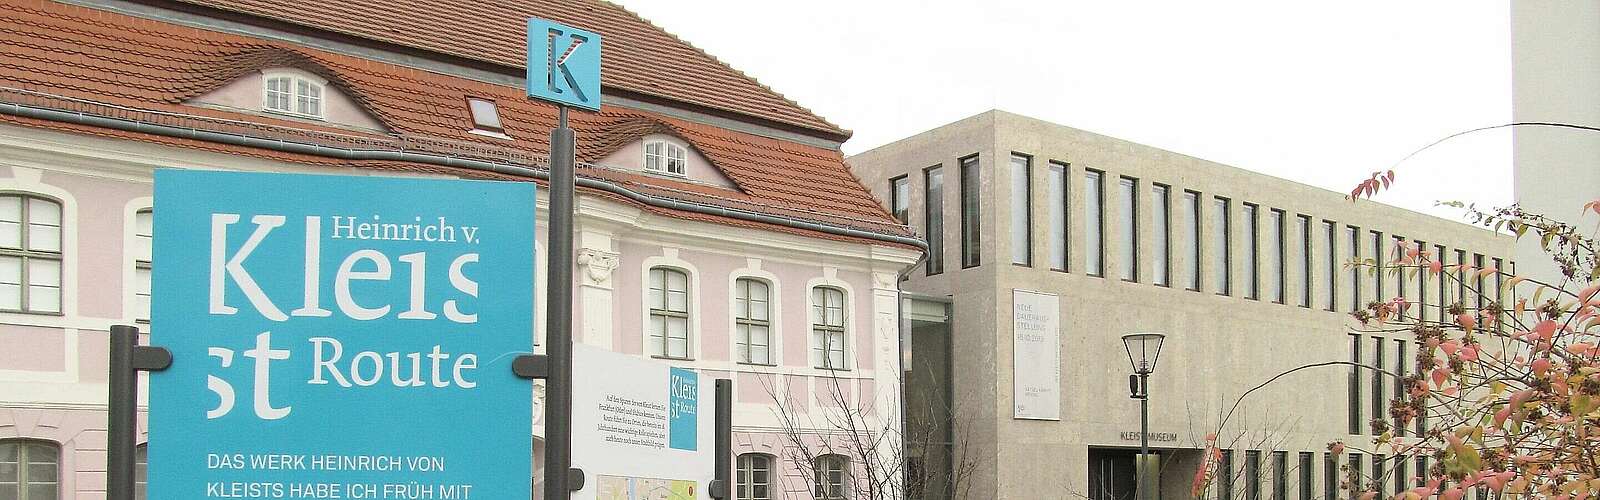 Kleist-Museum Frankfurt (Oder),
        
    

        Foto: Fotograf / Lizenz - Media Import/Matthias Fricke